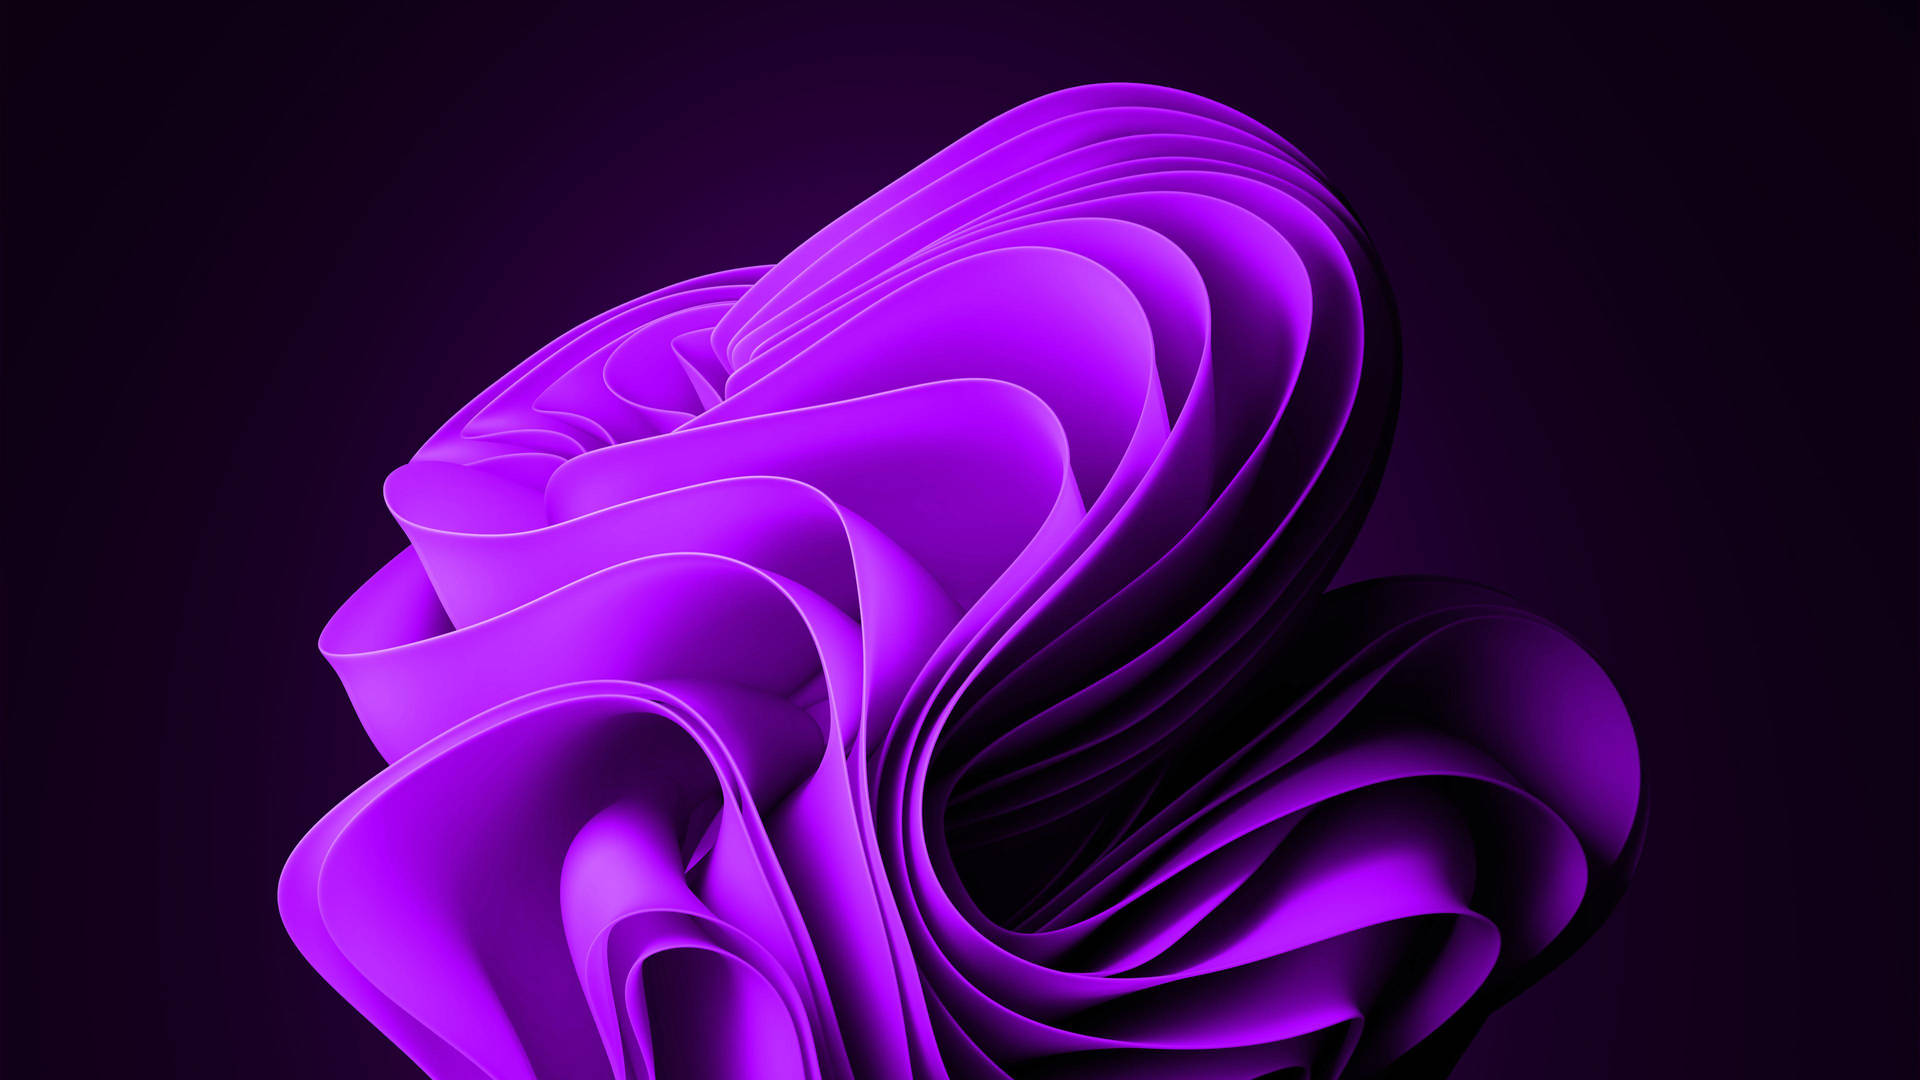 Free Violet Wallpaper Downloads, [200+] Violet Wallpapers for FREE |  